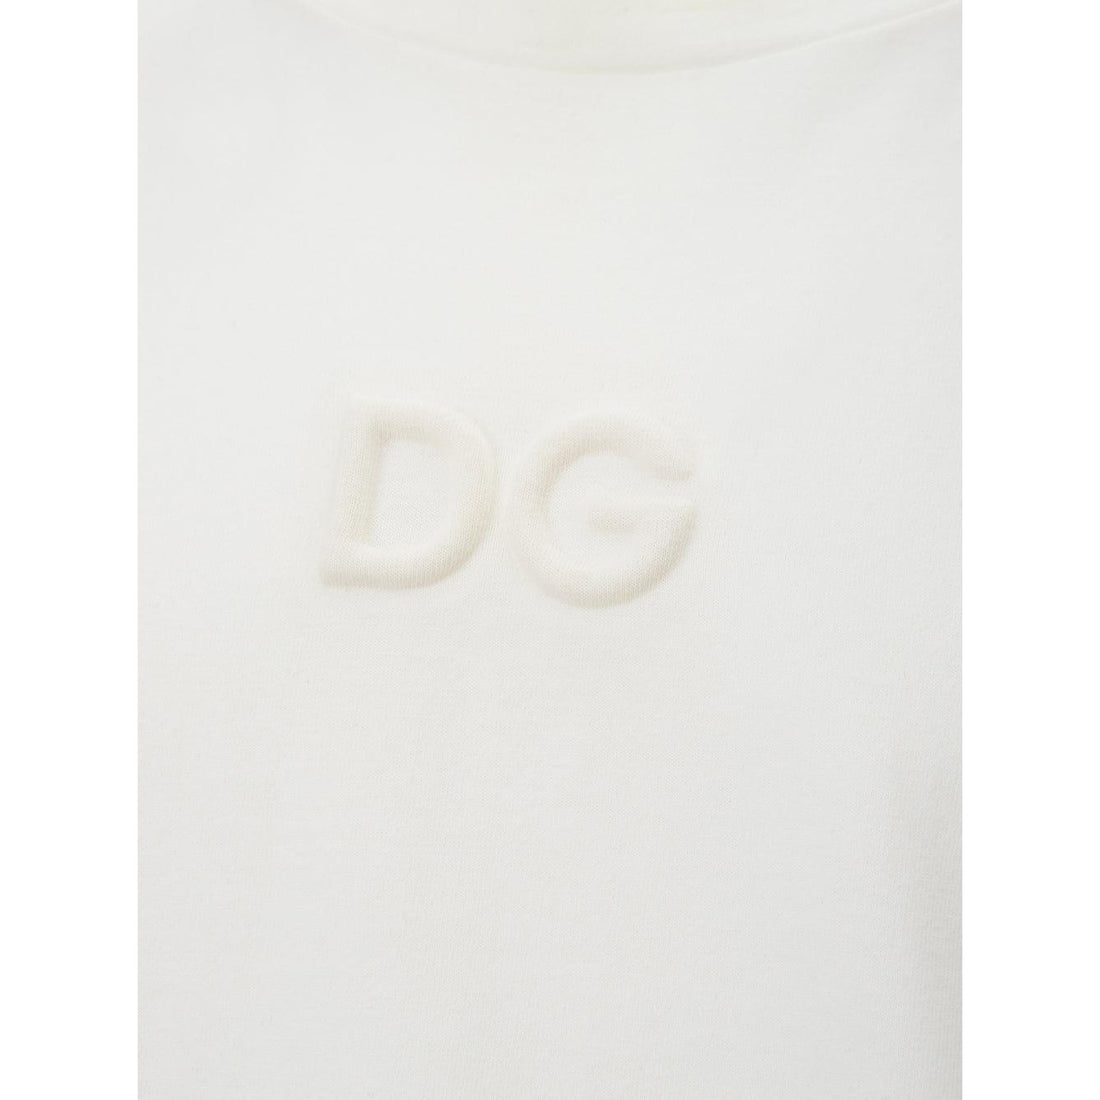 Dolce & Gabbana White Cotton T-Shirt with Logo